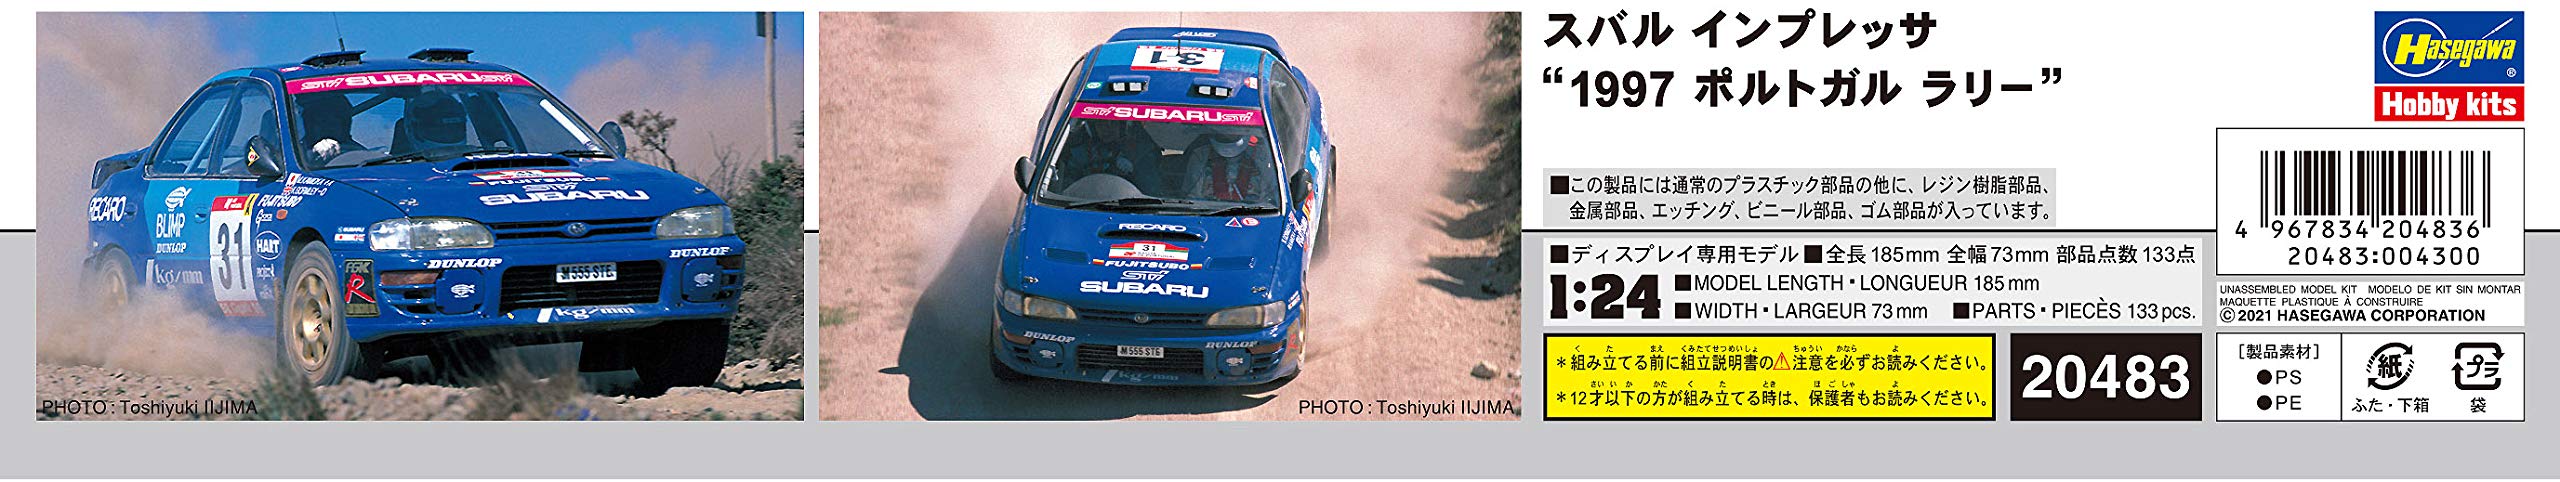 HASEGAWA 1/24 Subaru Impreza '1997 Portugal Rally' Plastic Model